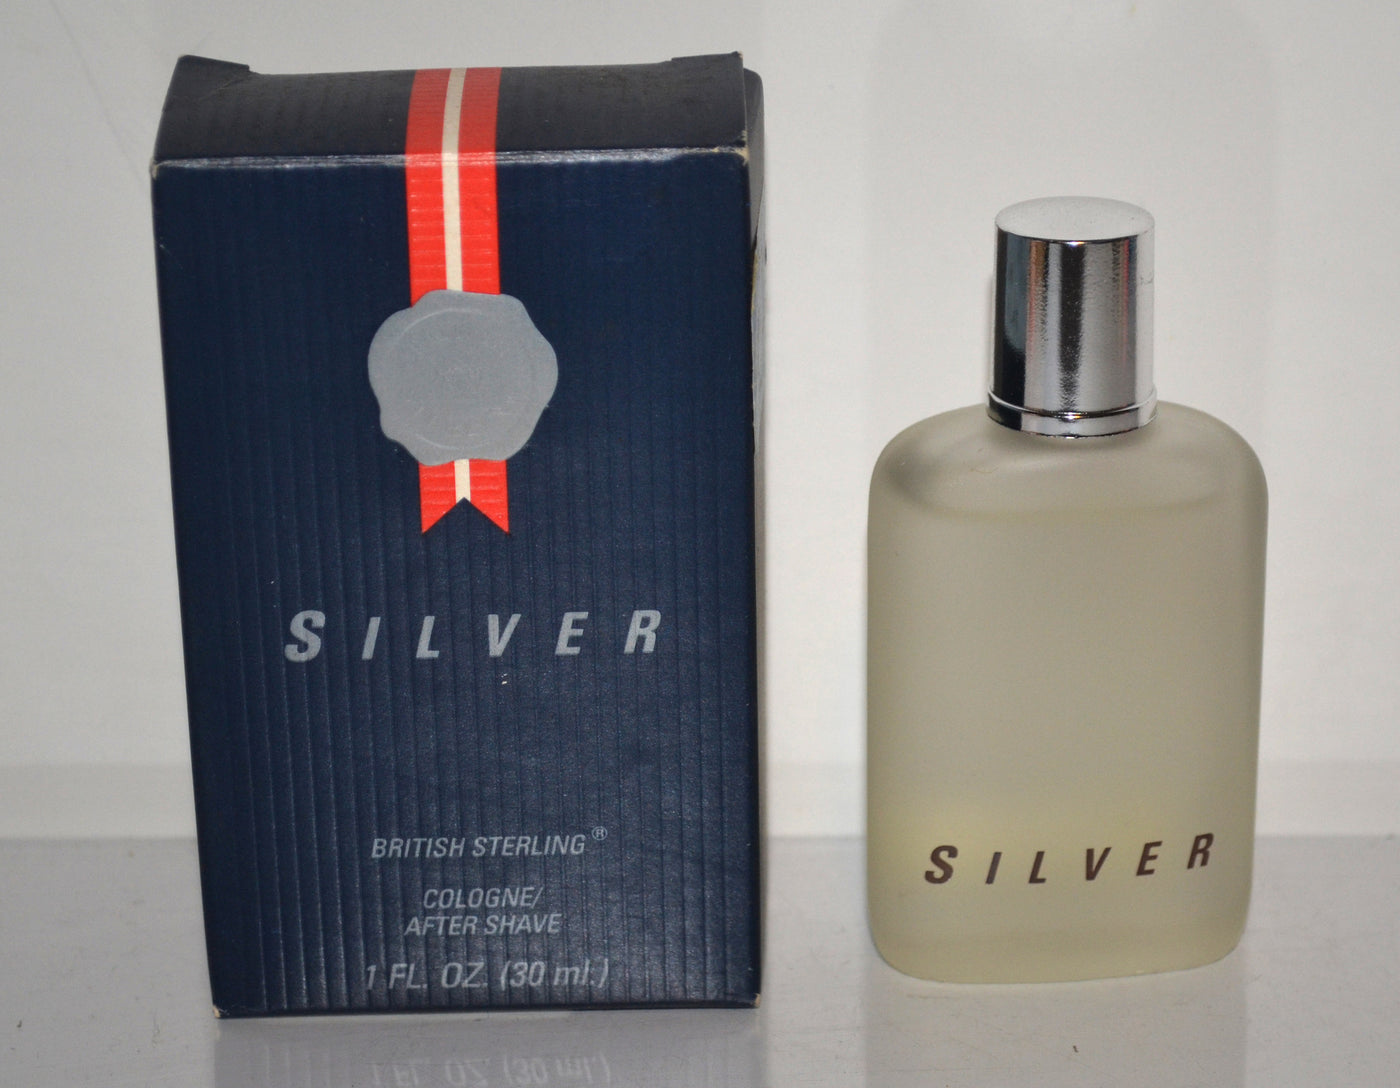 British Sterling Silver Cologne